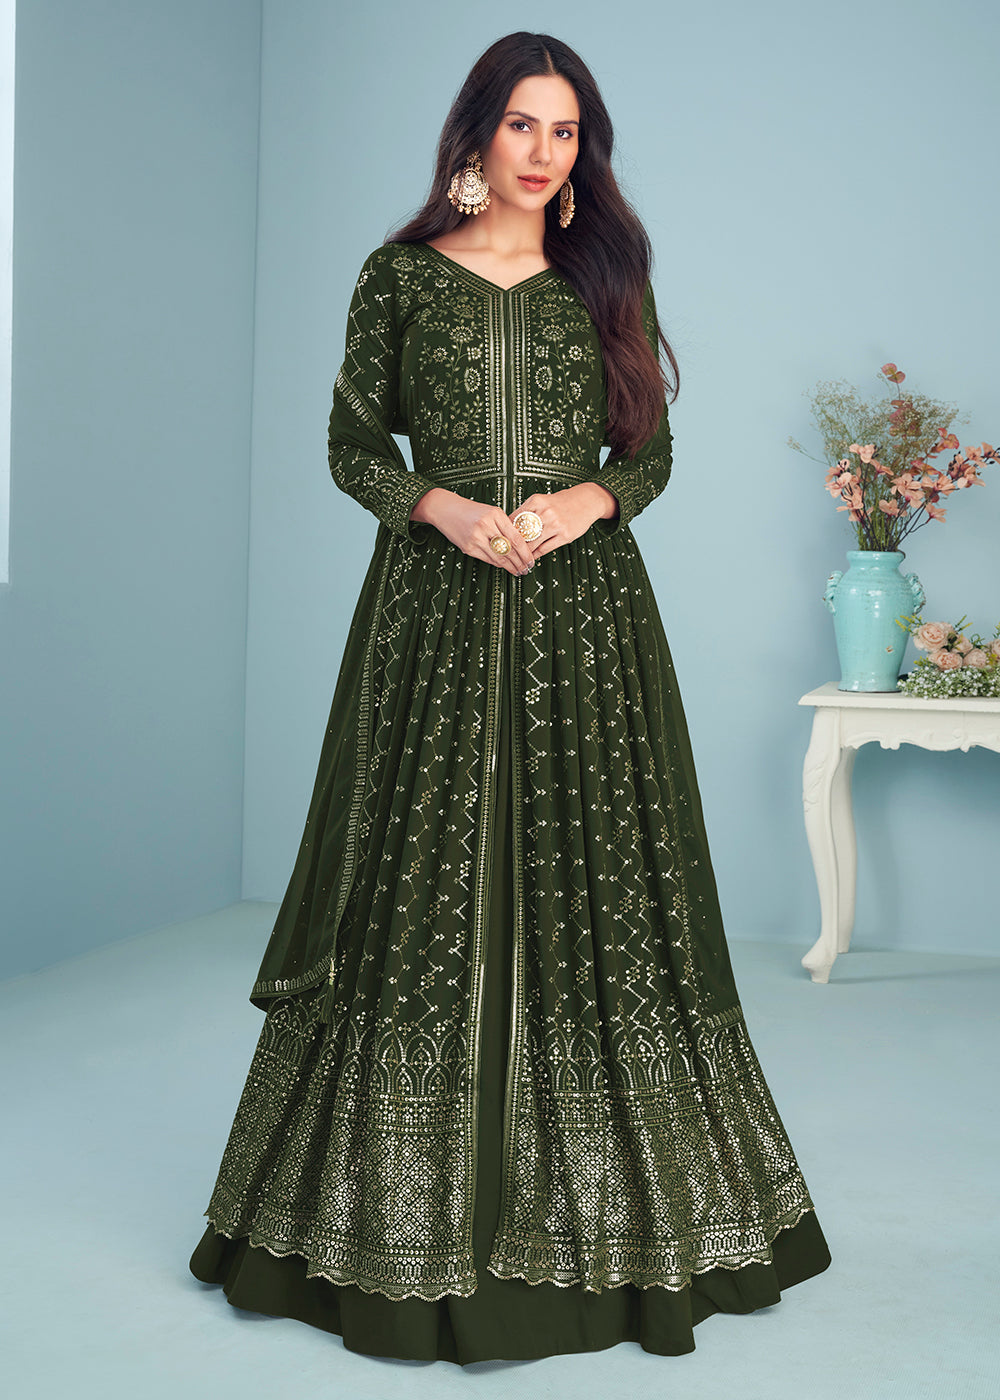 Buy Now Mahendi Green Wedding Wear Designer Anarkali Suit Online in USA, UK, Australia, New Zealand, Canada & Worldwide at Empress Clothing.